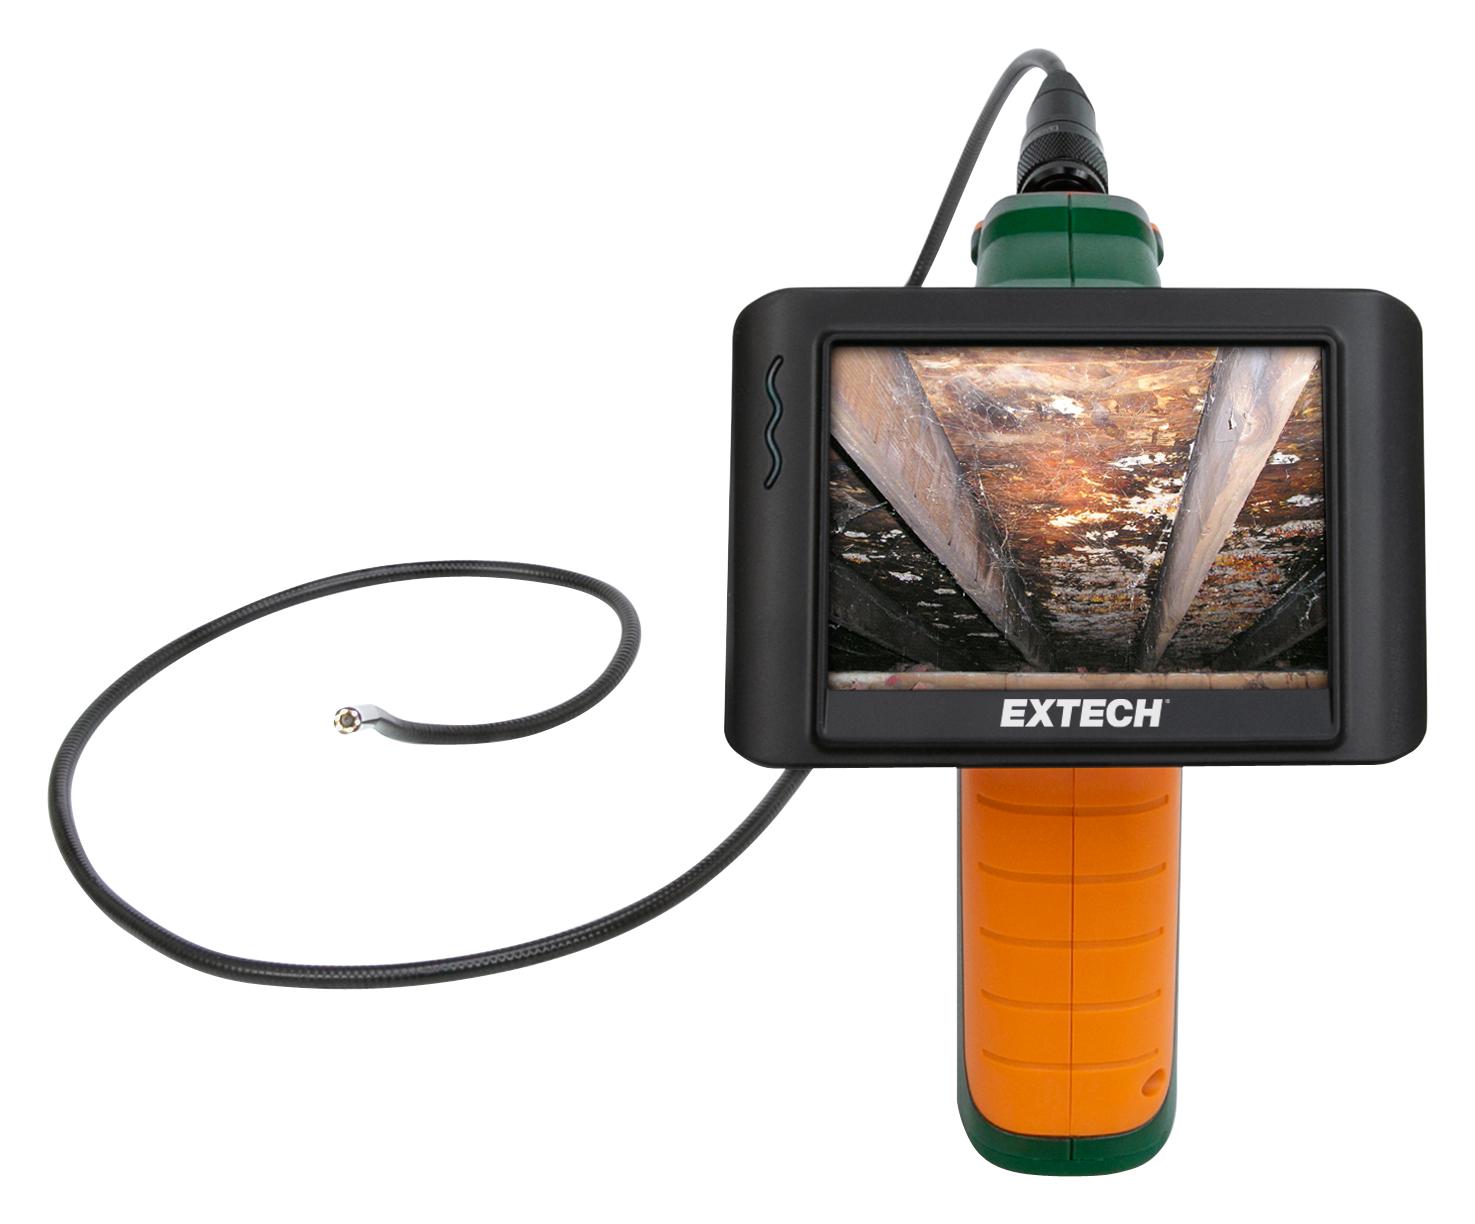 Extech Instruments Br250-5 Video Borescope Inspection Camera, 5.2mm